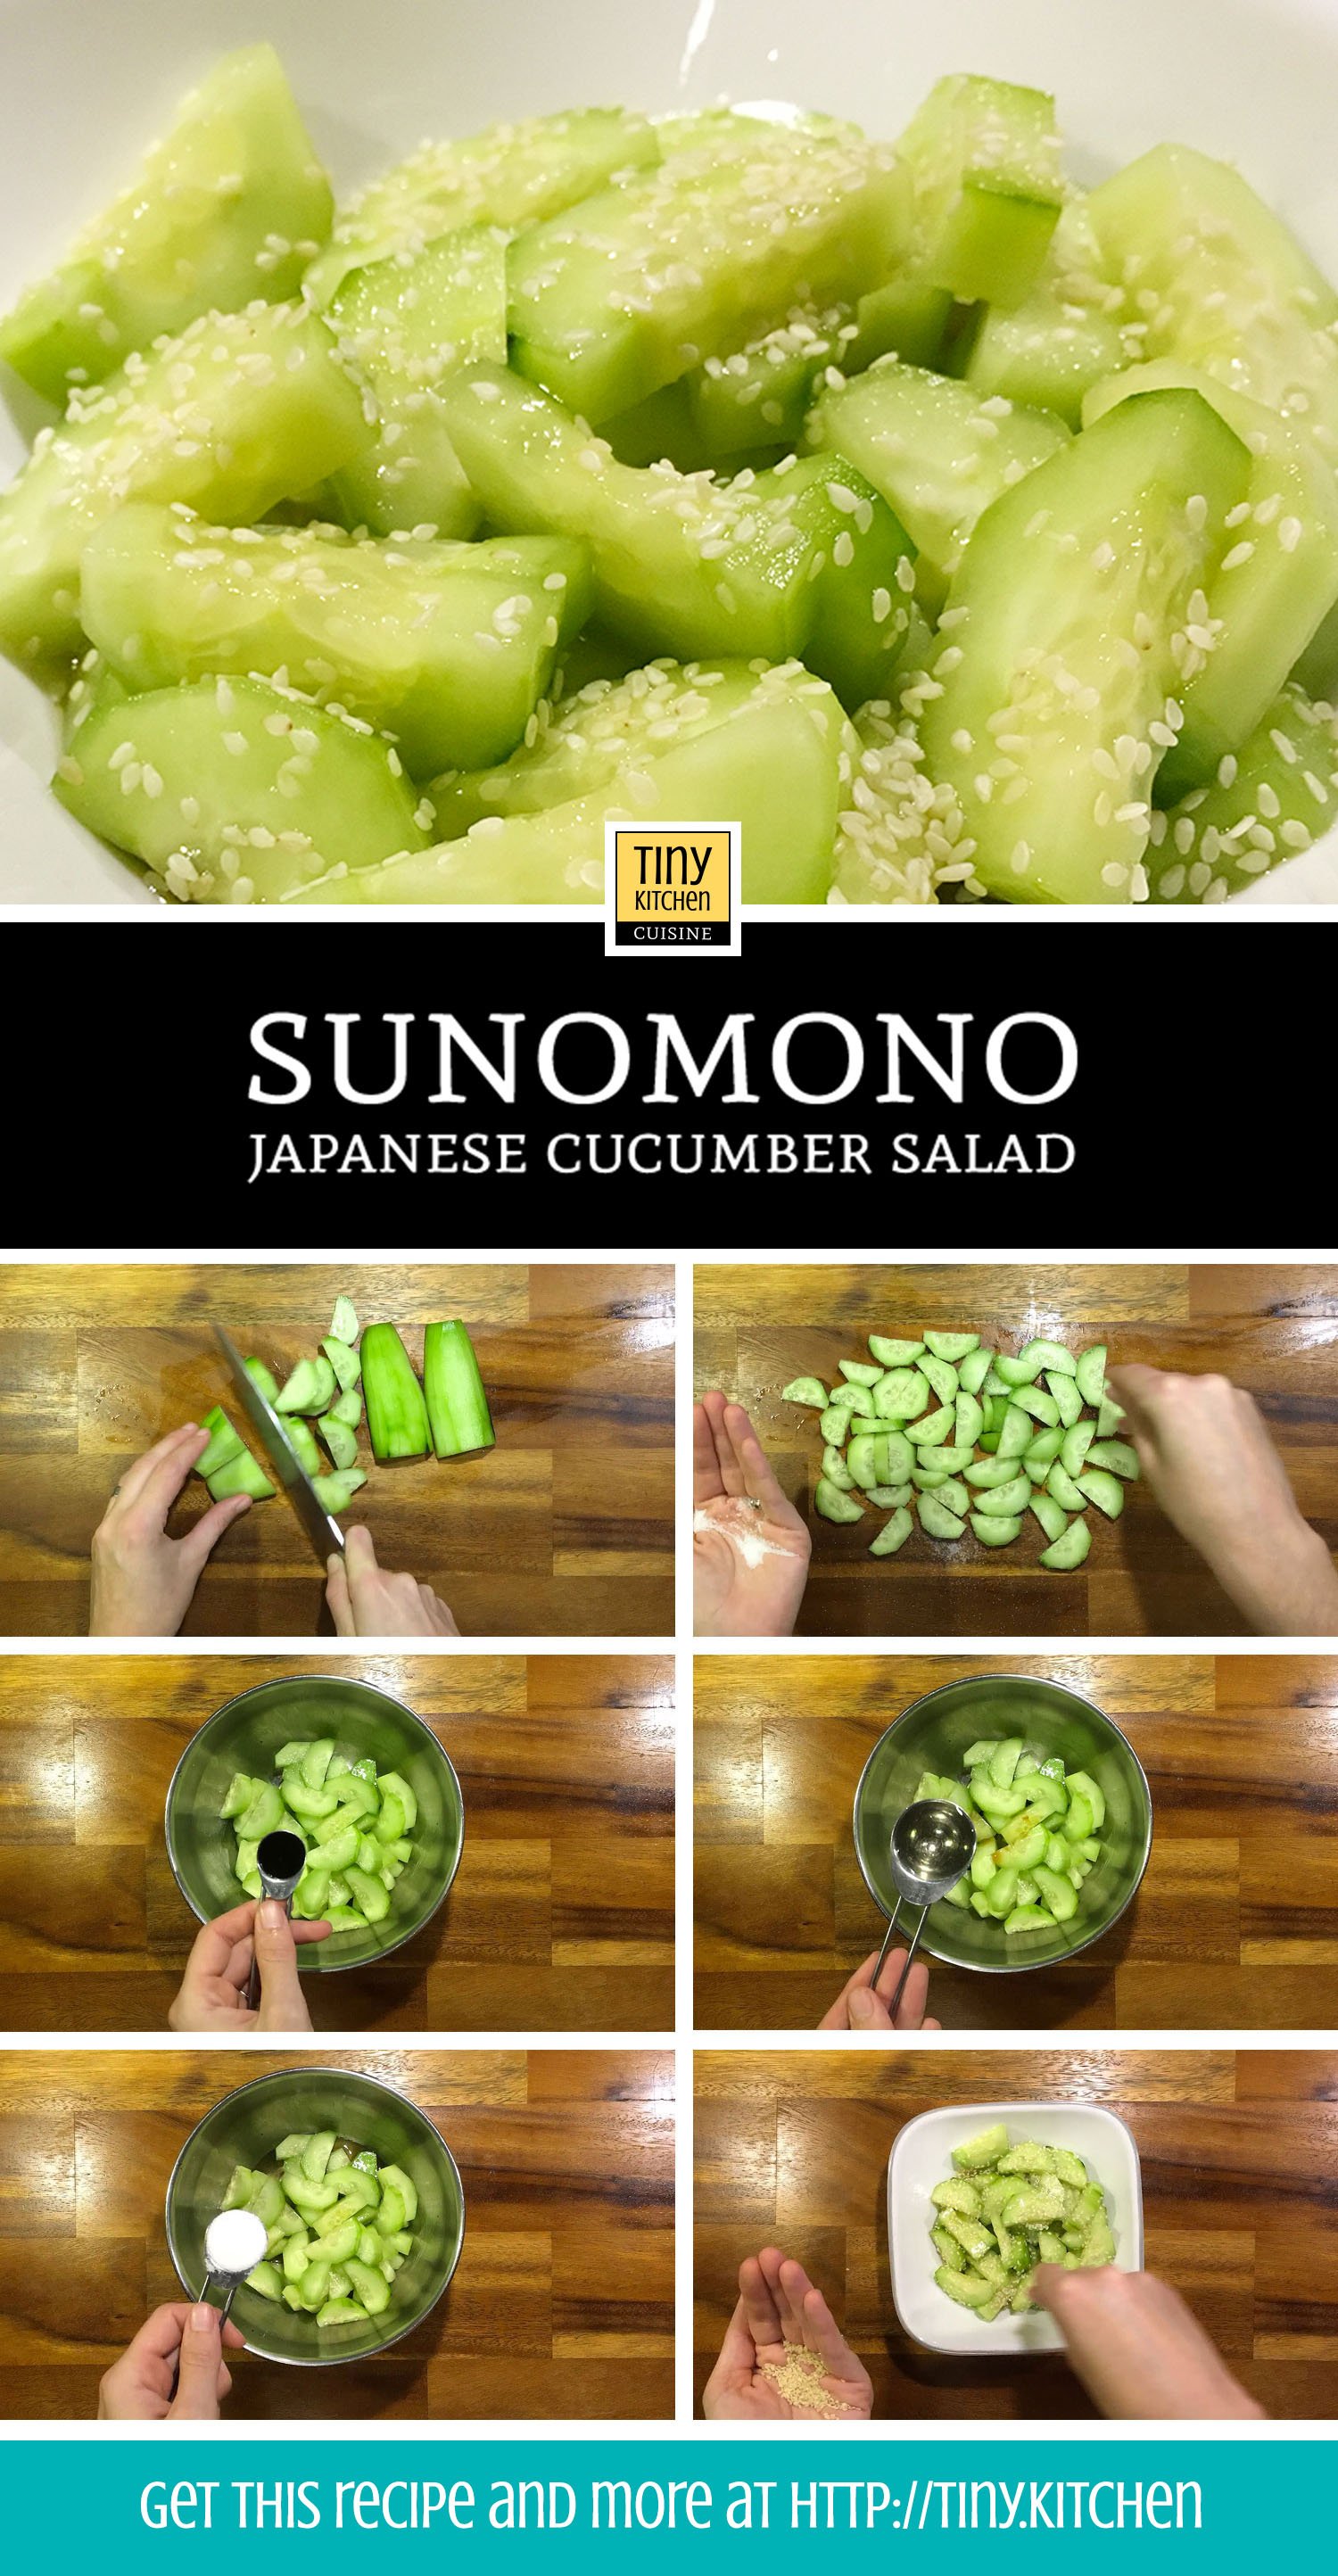 How To Make Sunomono: A Japanese Cucumber Salad Recipe